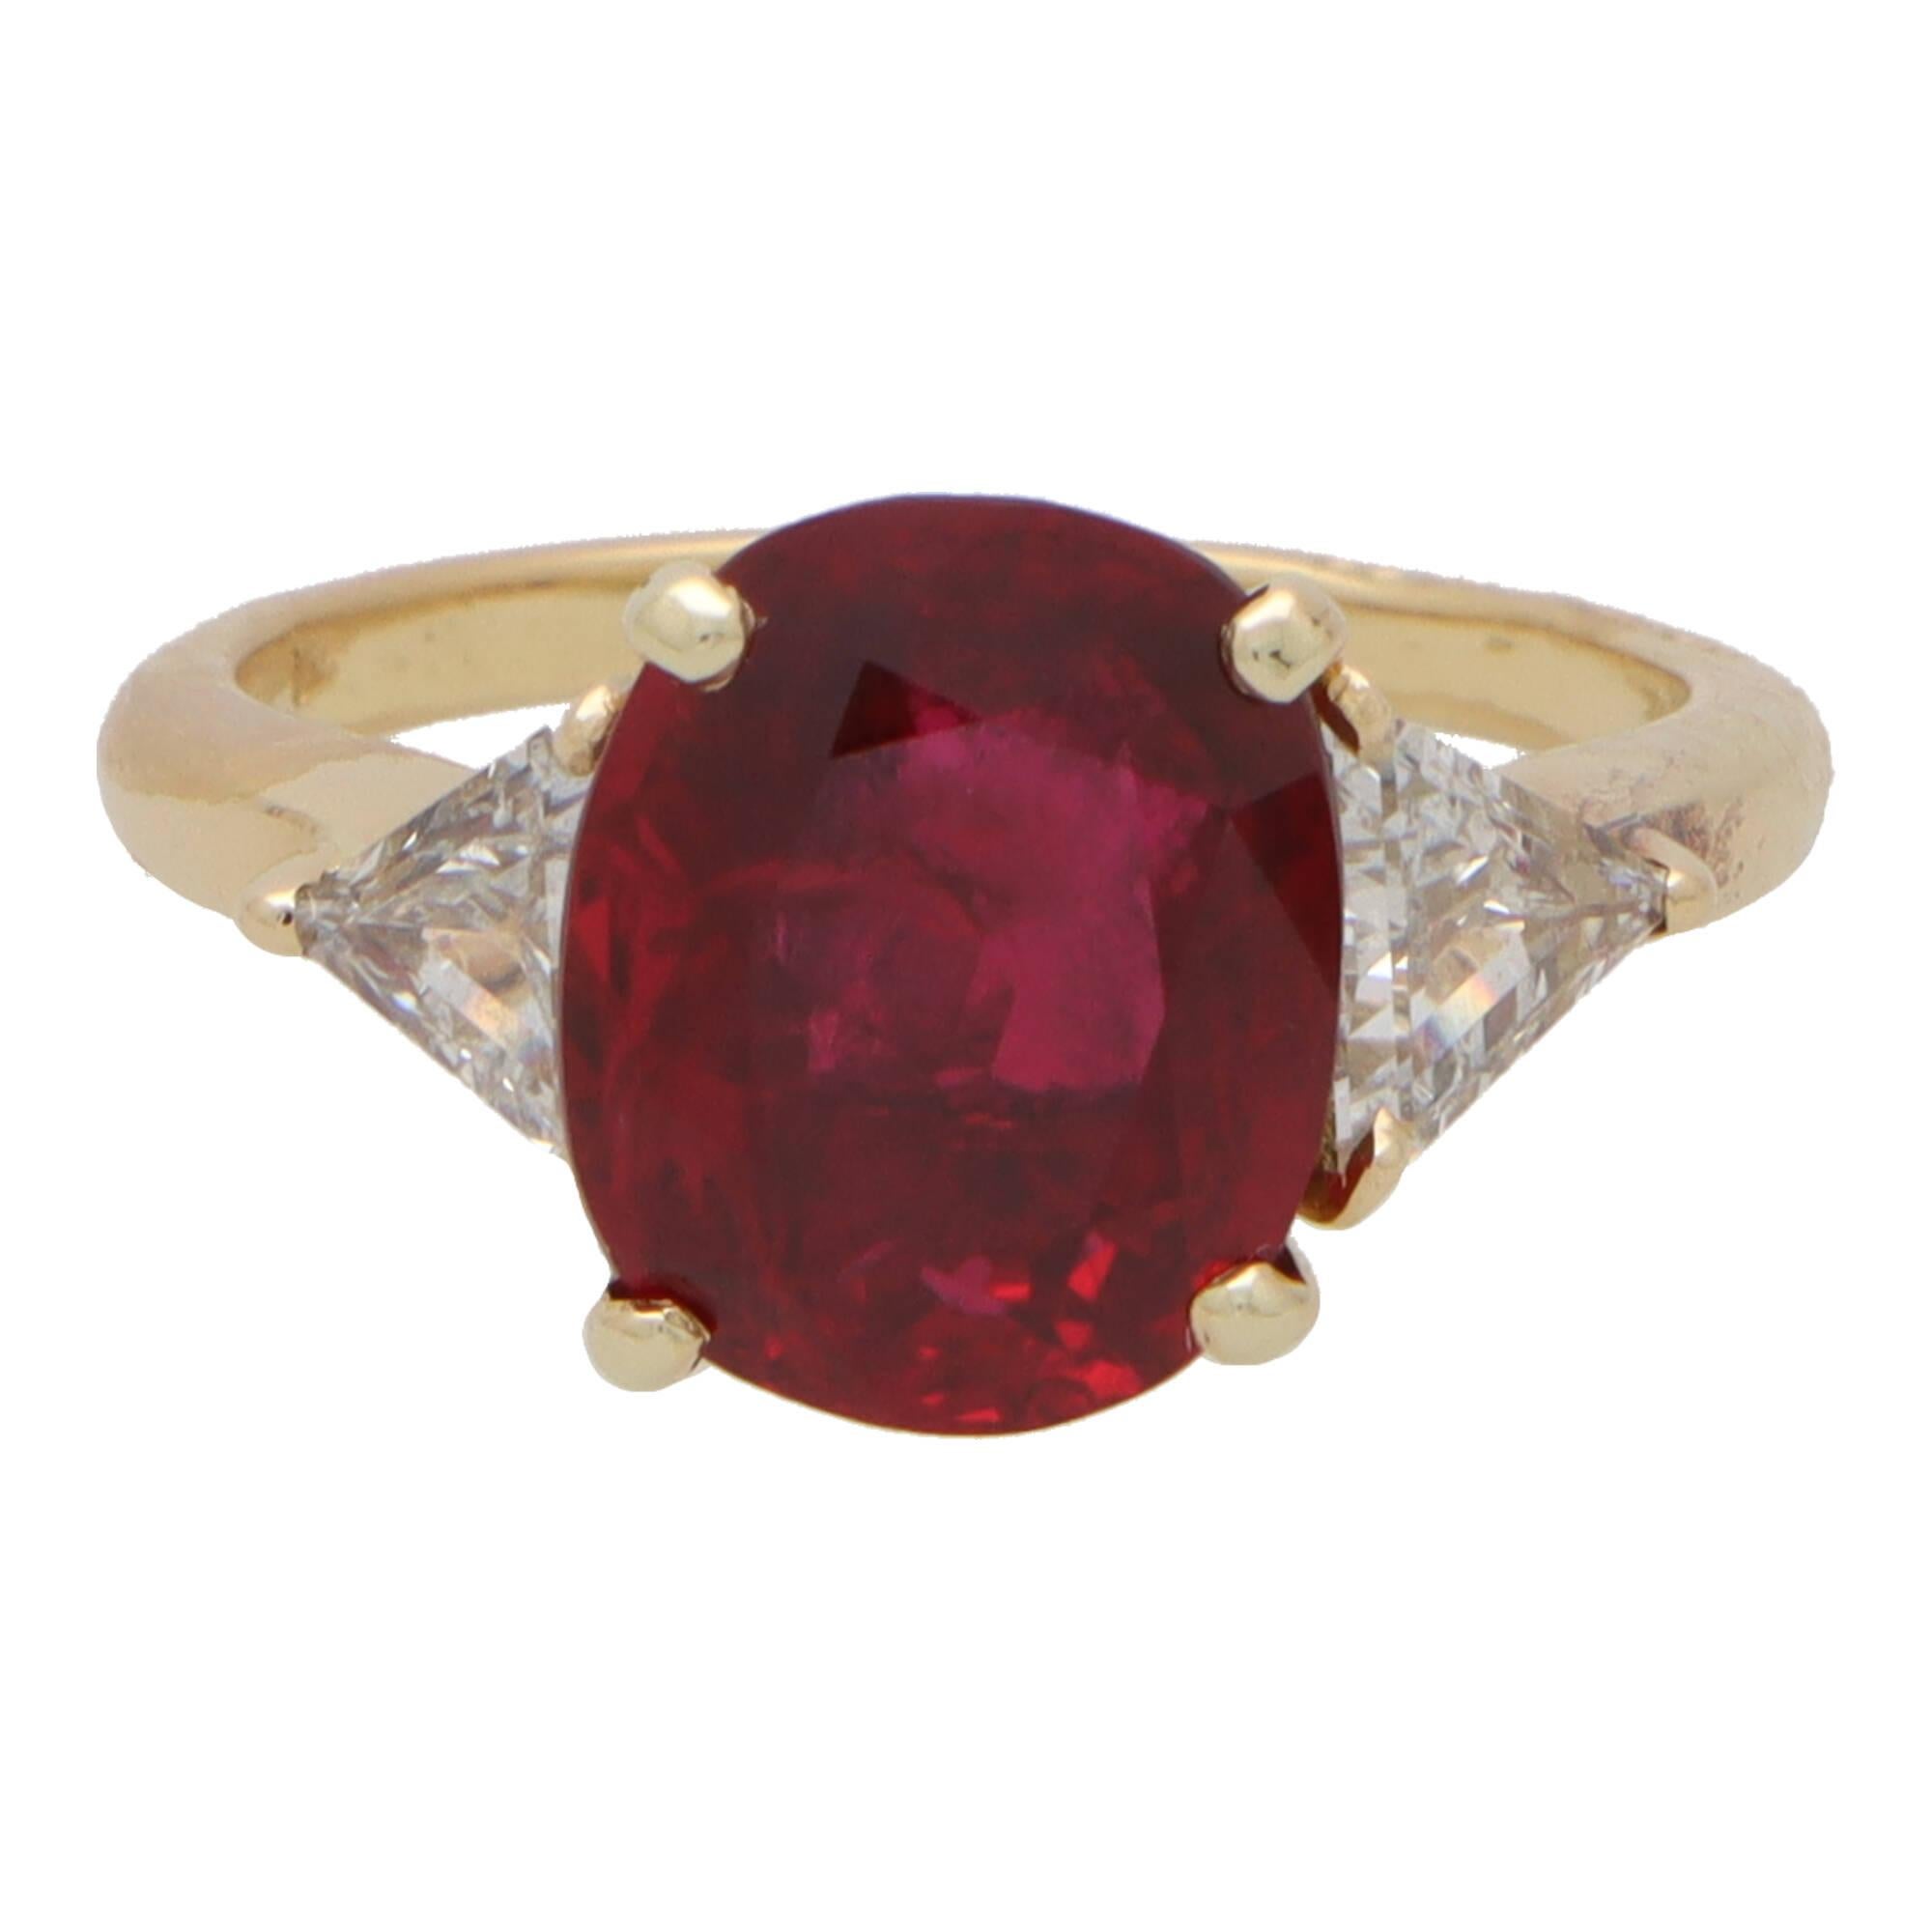  Vintage Boucheron Ruby and Diamond Ring Set in 18k Yellow Gold